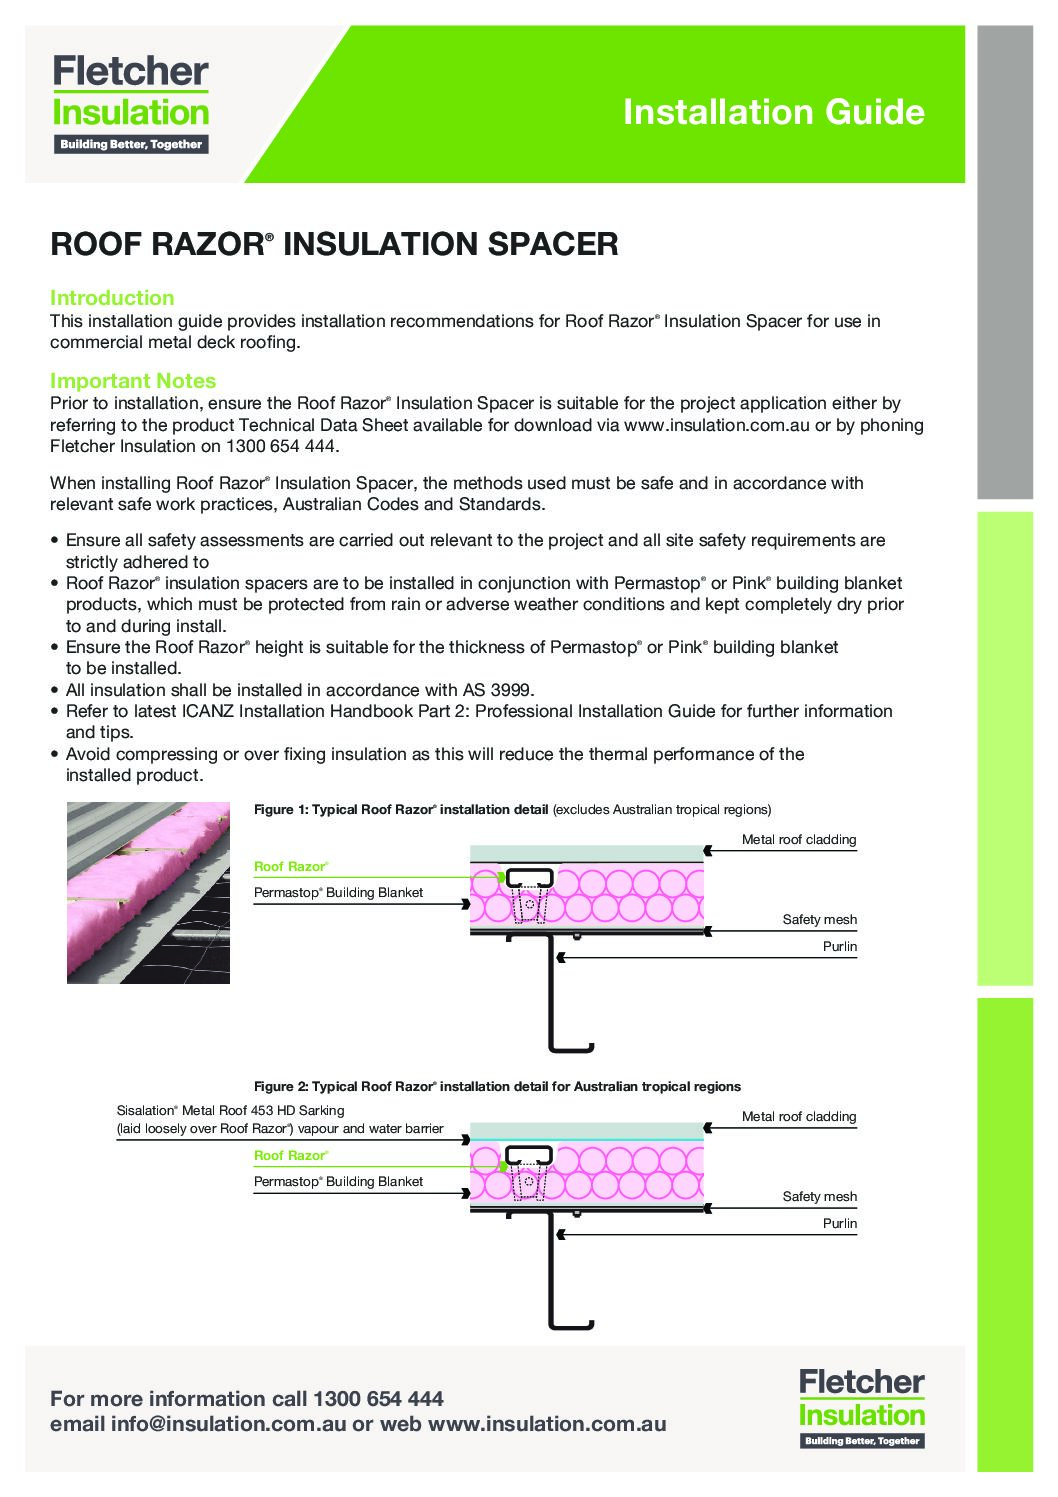 Installation Guidelines – Roof Razor® Insulation Spacer